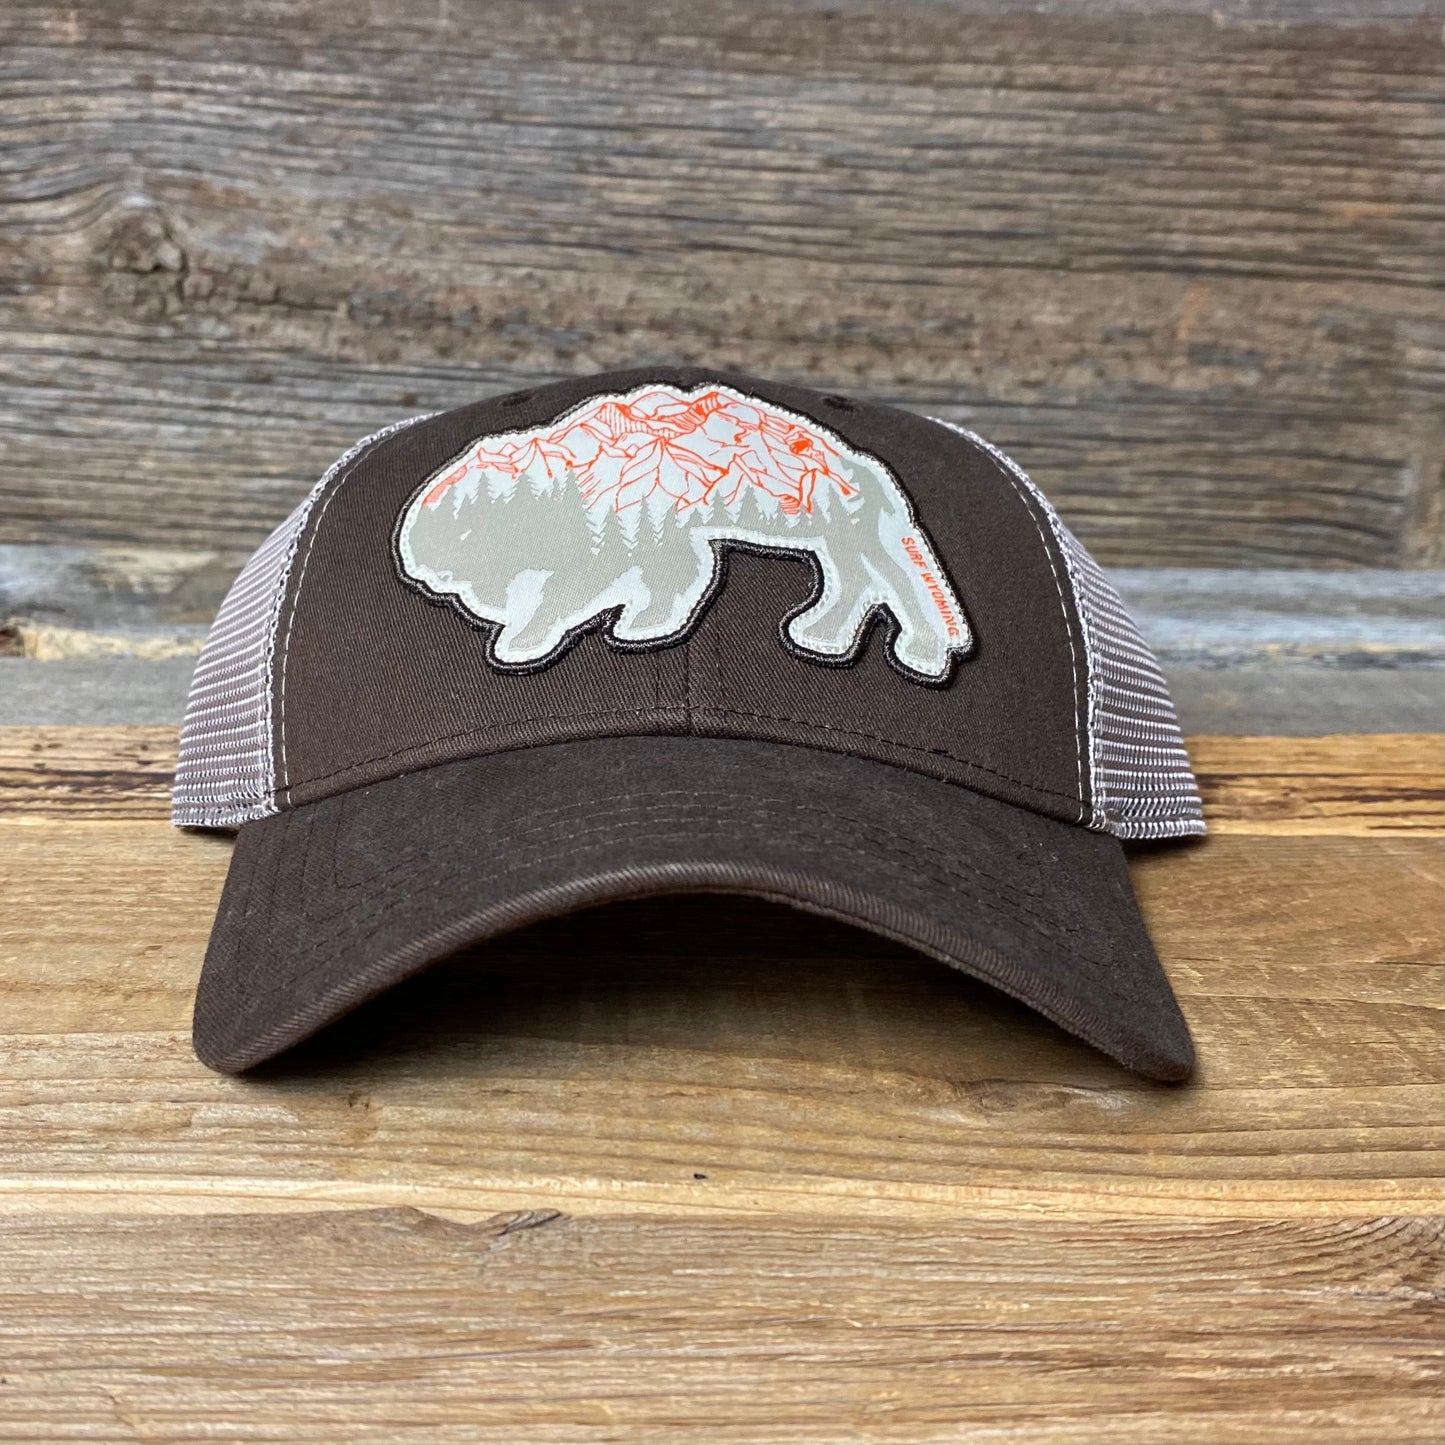 Surf Wyoming® Bison Peak Trucker Hat - Brown/Khaki